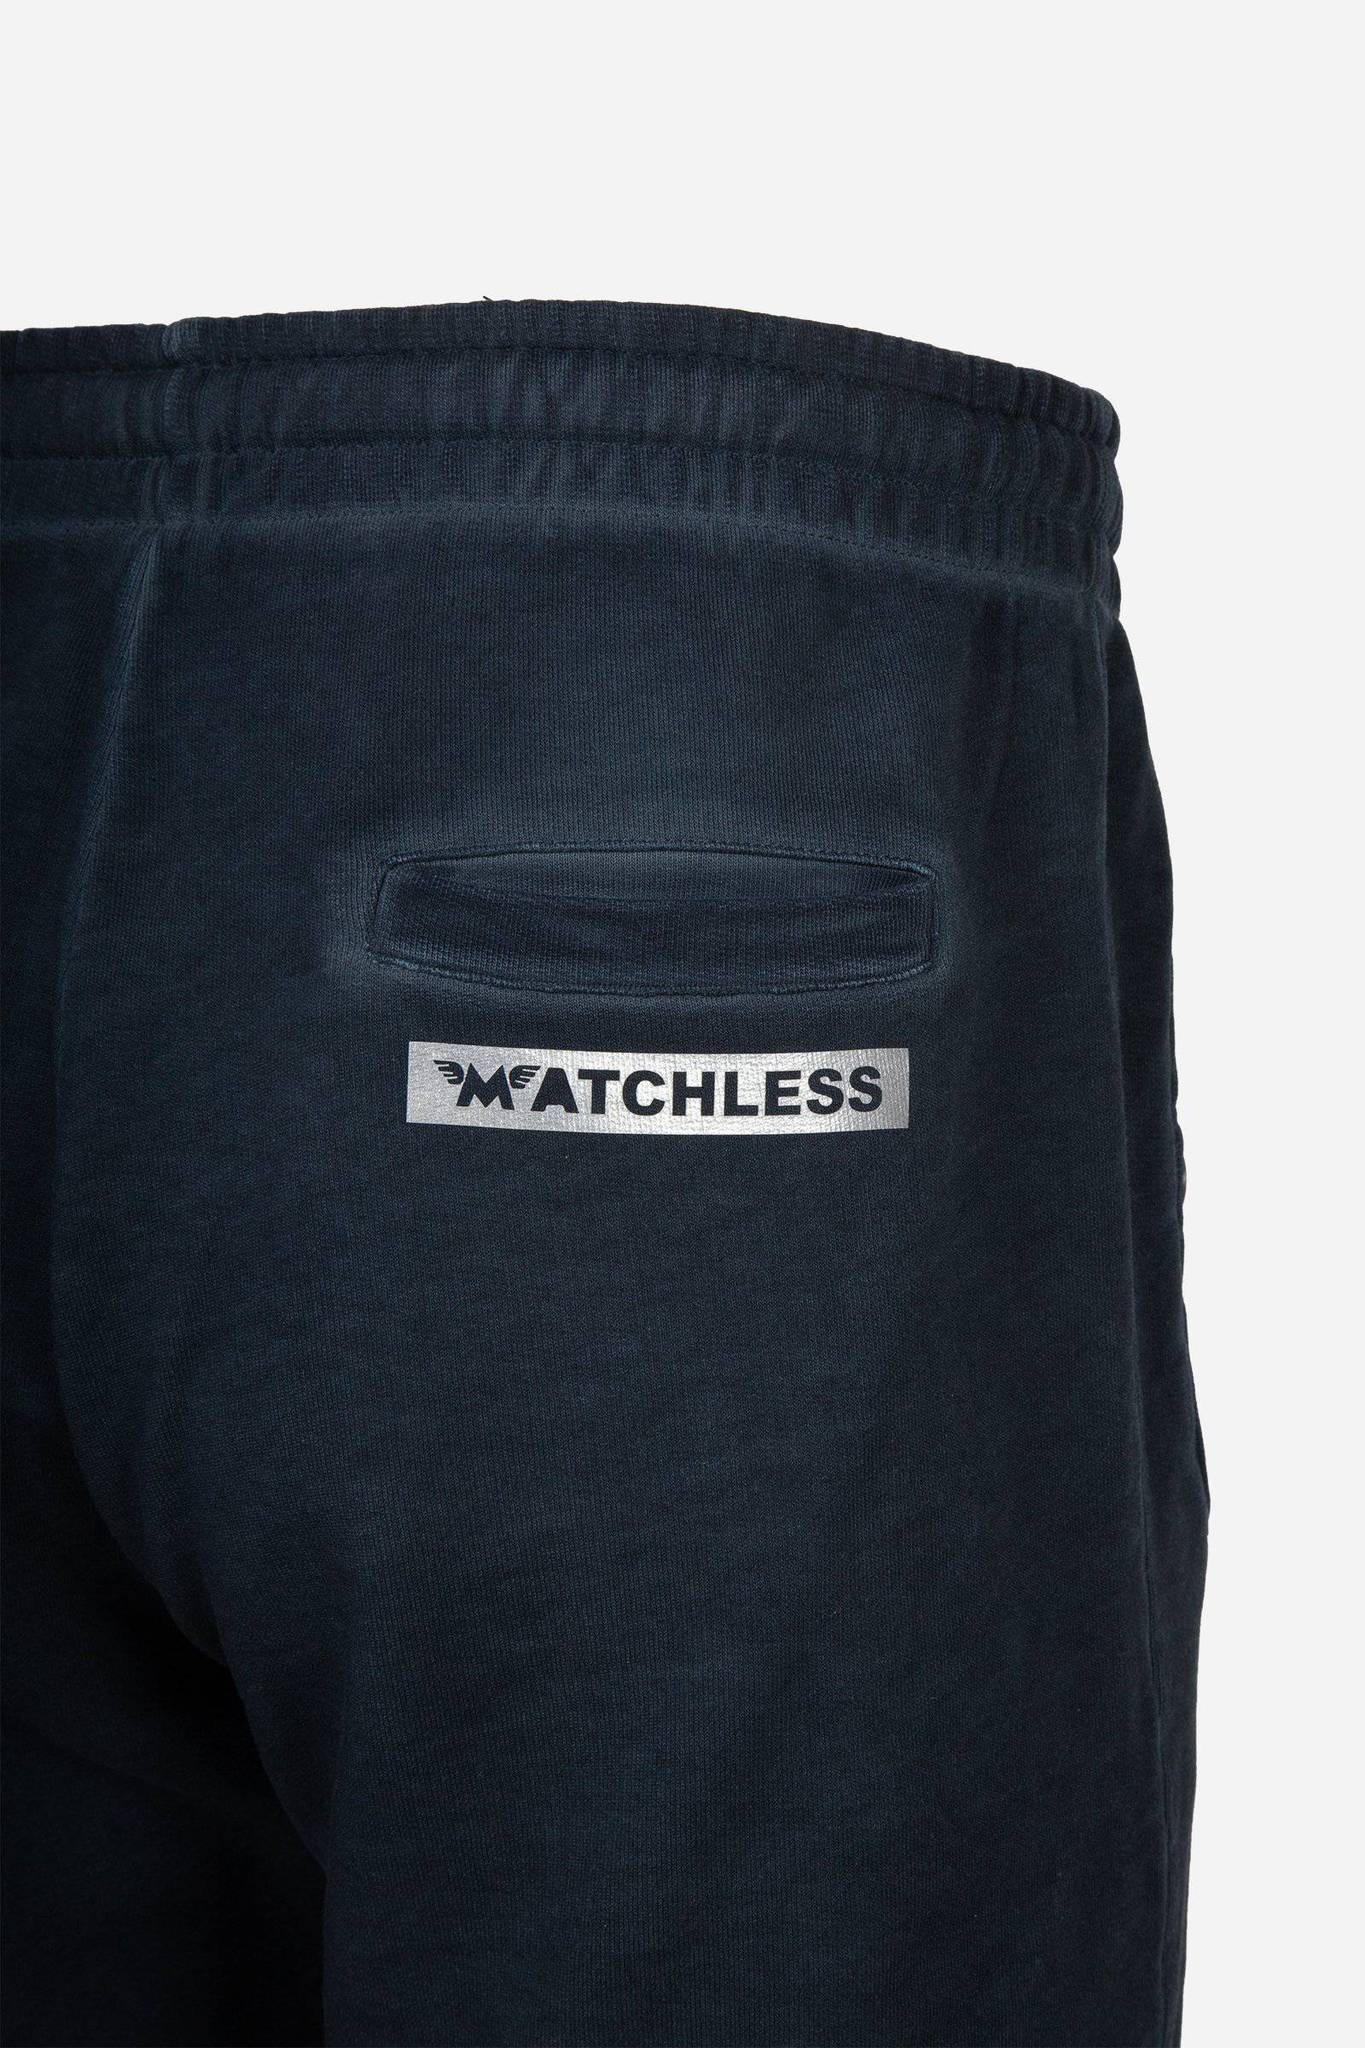 Matchless Stripe Men's Sweat Pants Navy - Close Up Logo